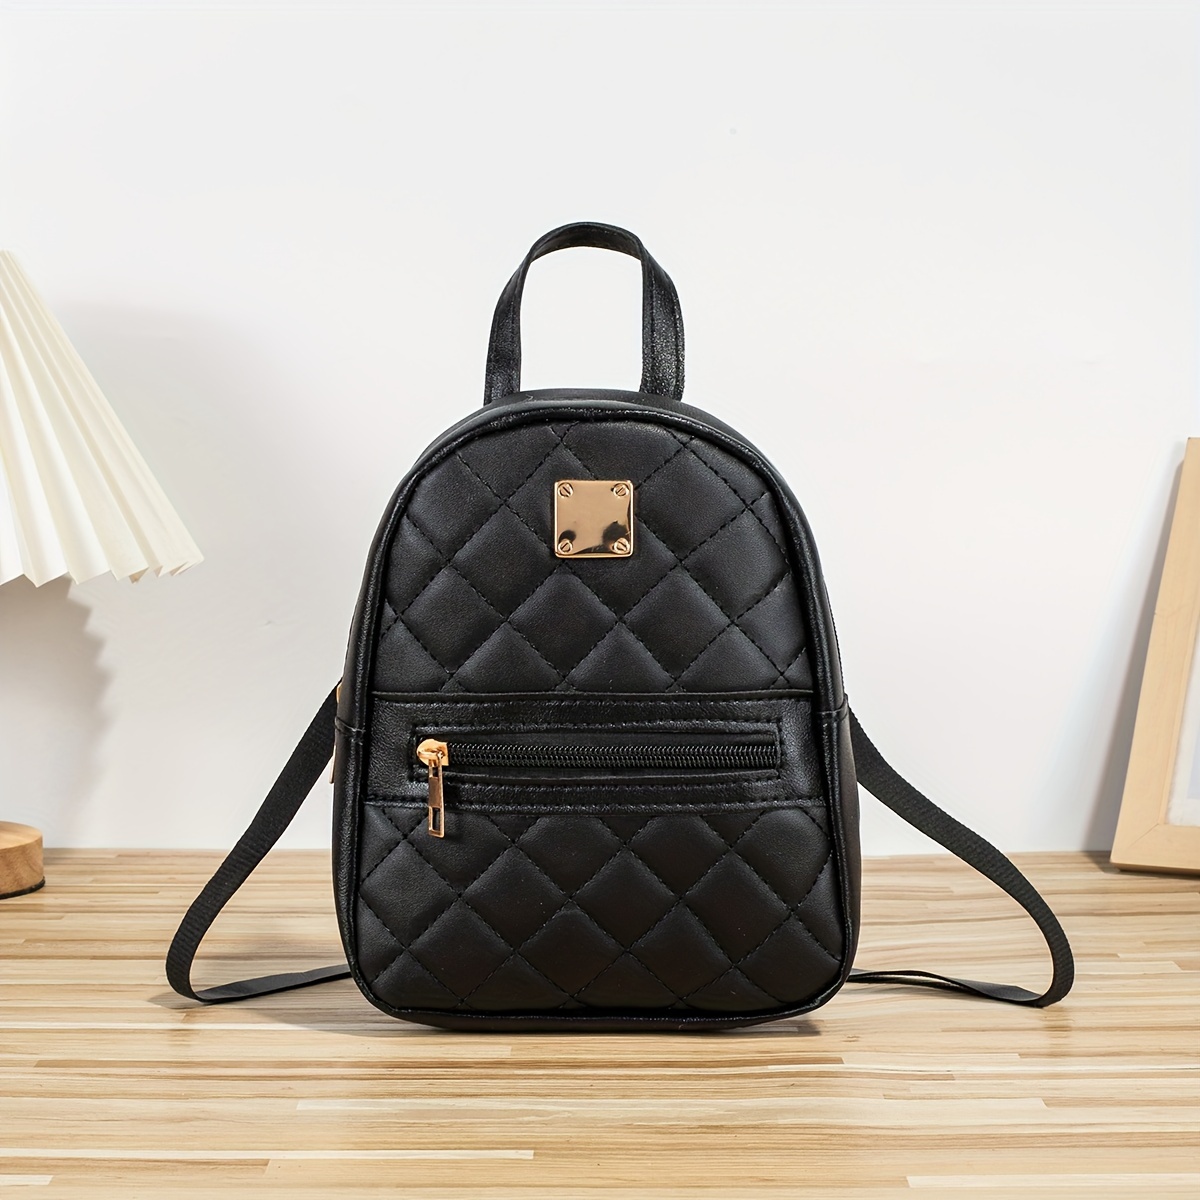 

New Embroidered Line Argyle Backpack, Double Pocket Women's Backpack, Solid Color Texture Handbag